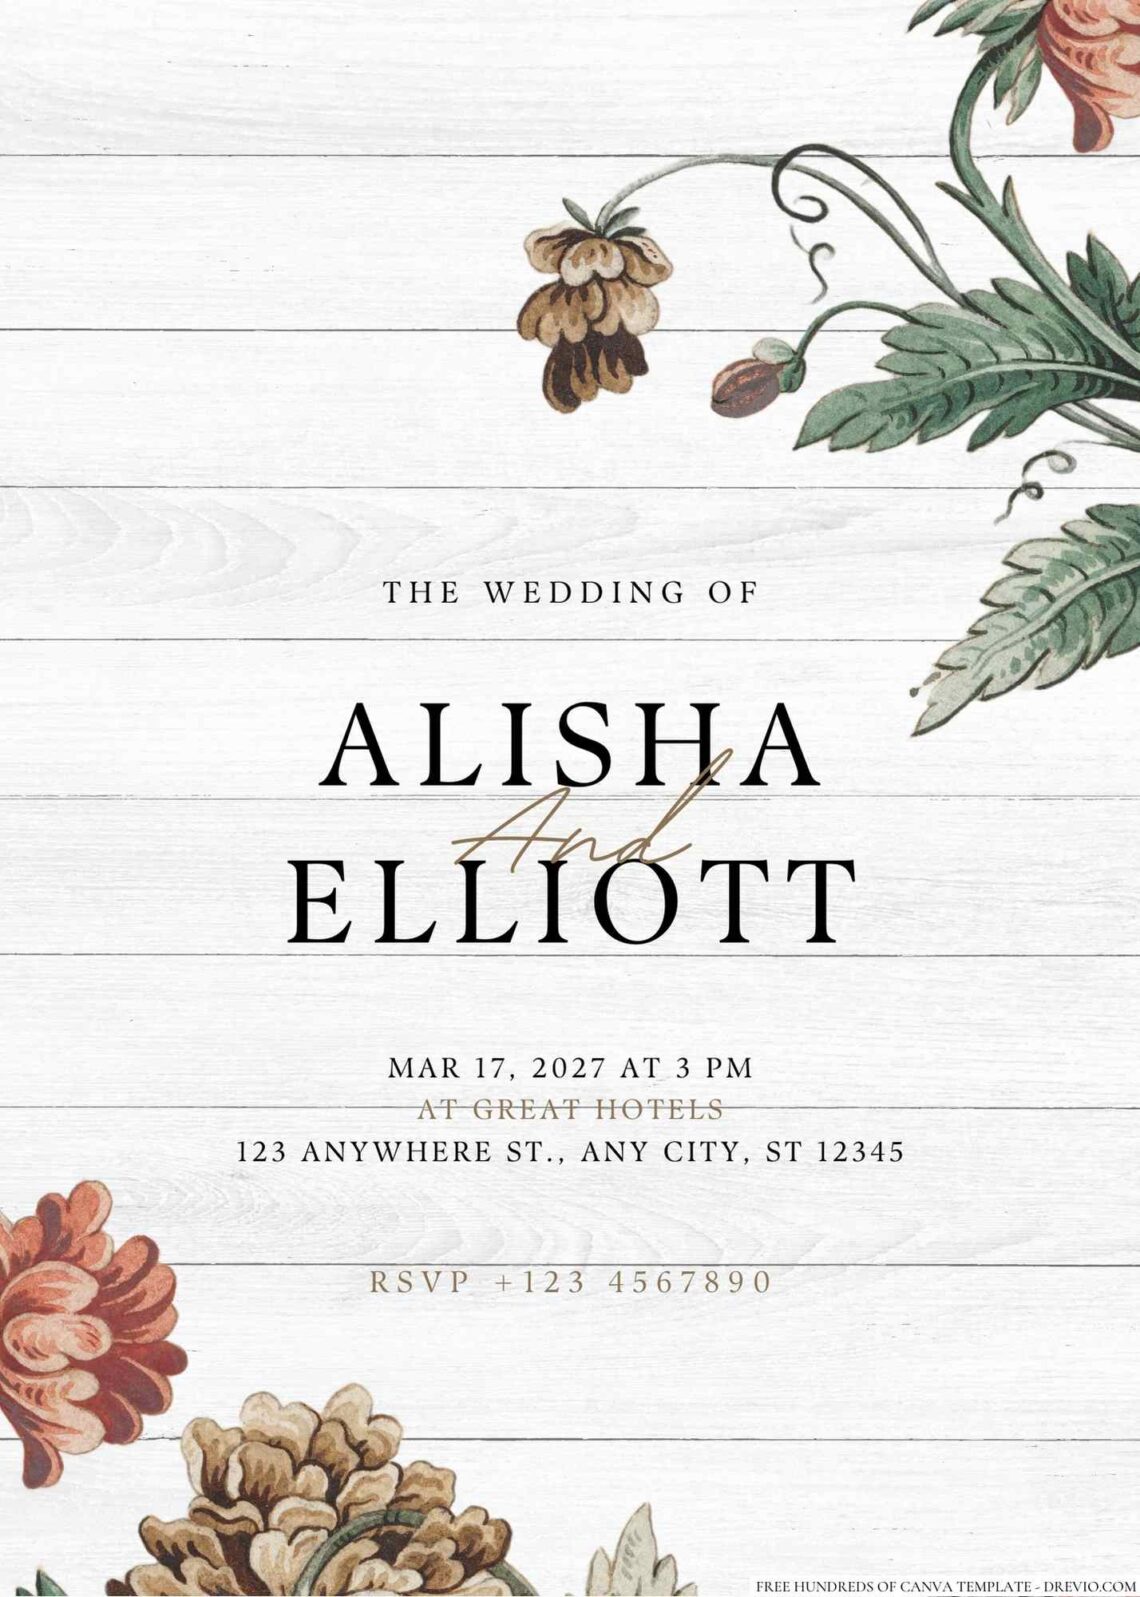 Free Editable Wood Drawing Brown Red Flower Wedding Invitation